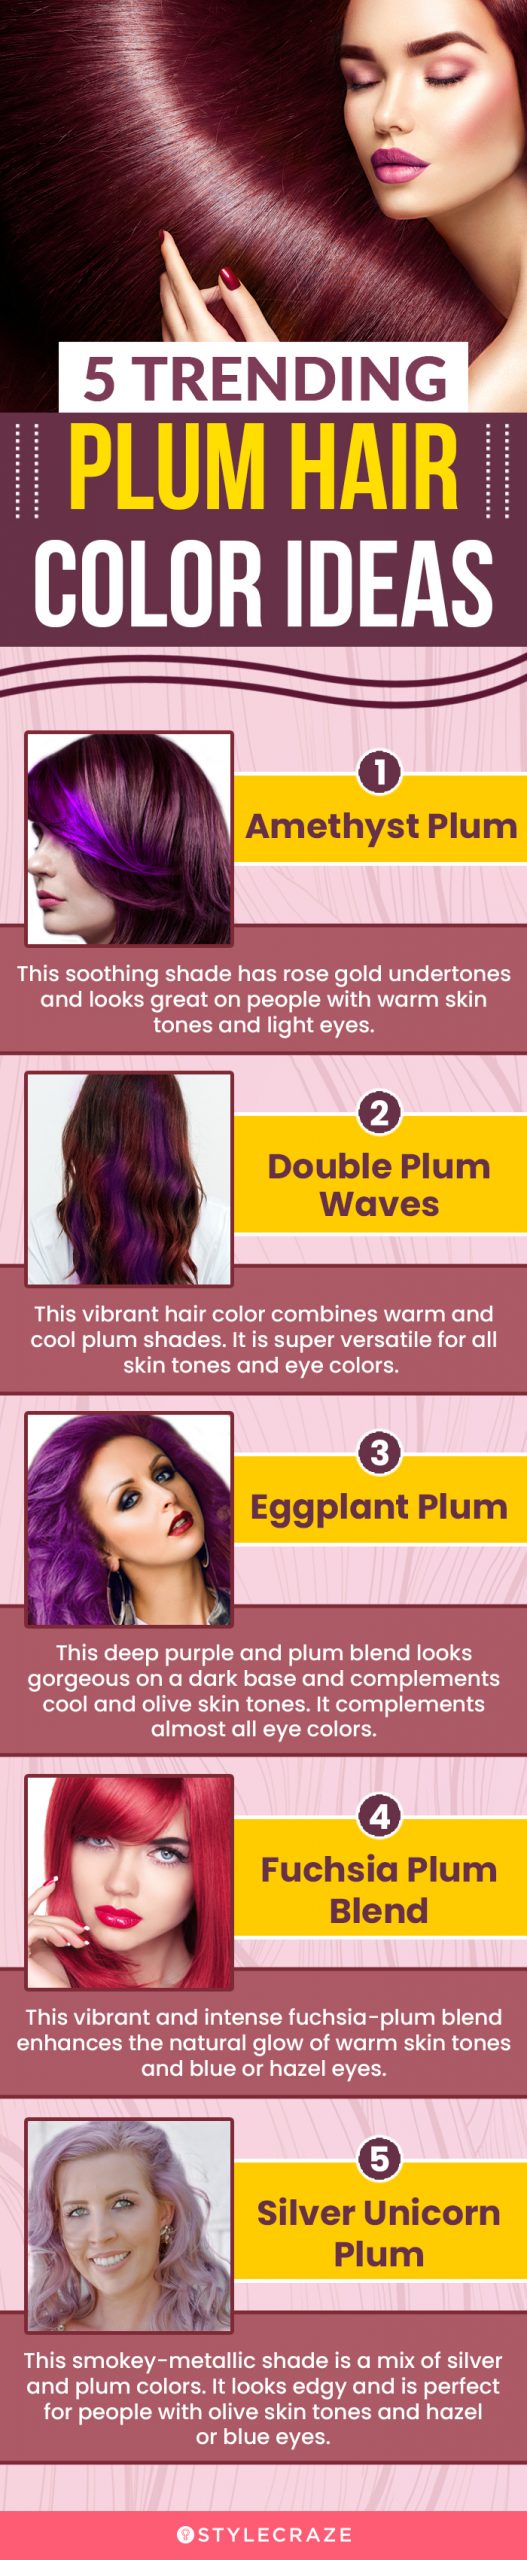 5 trending plum hair color ideas (infographic)